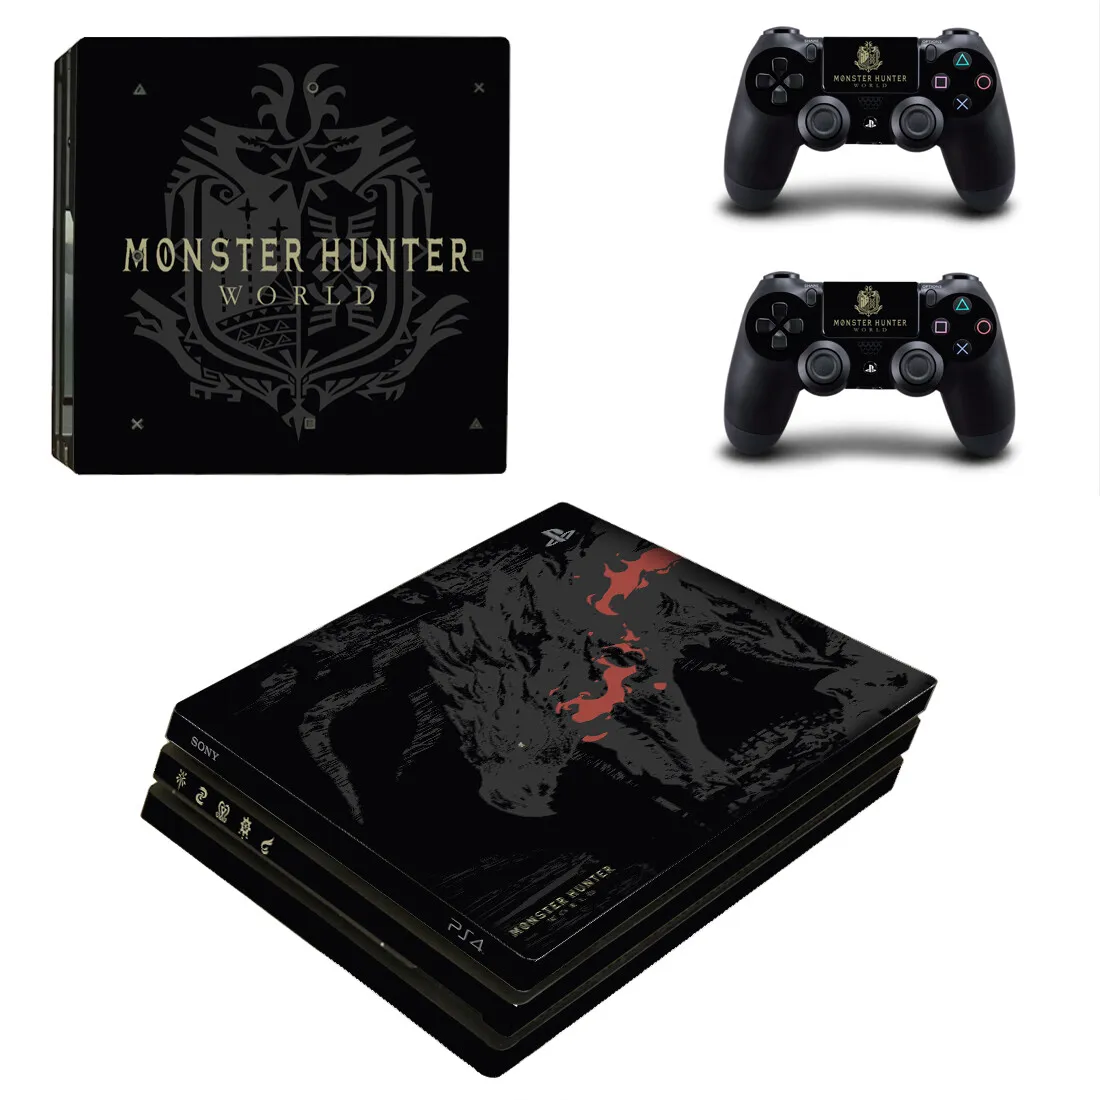 World Monster Hunter Ps4 Console | Monster Hunter Sticker Ps4